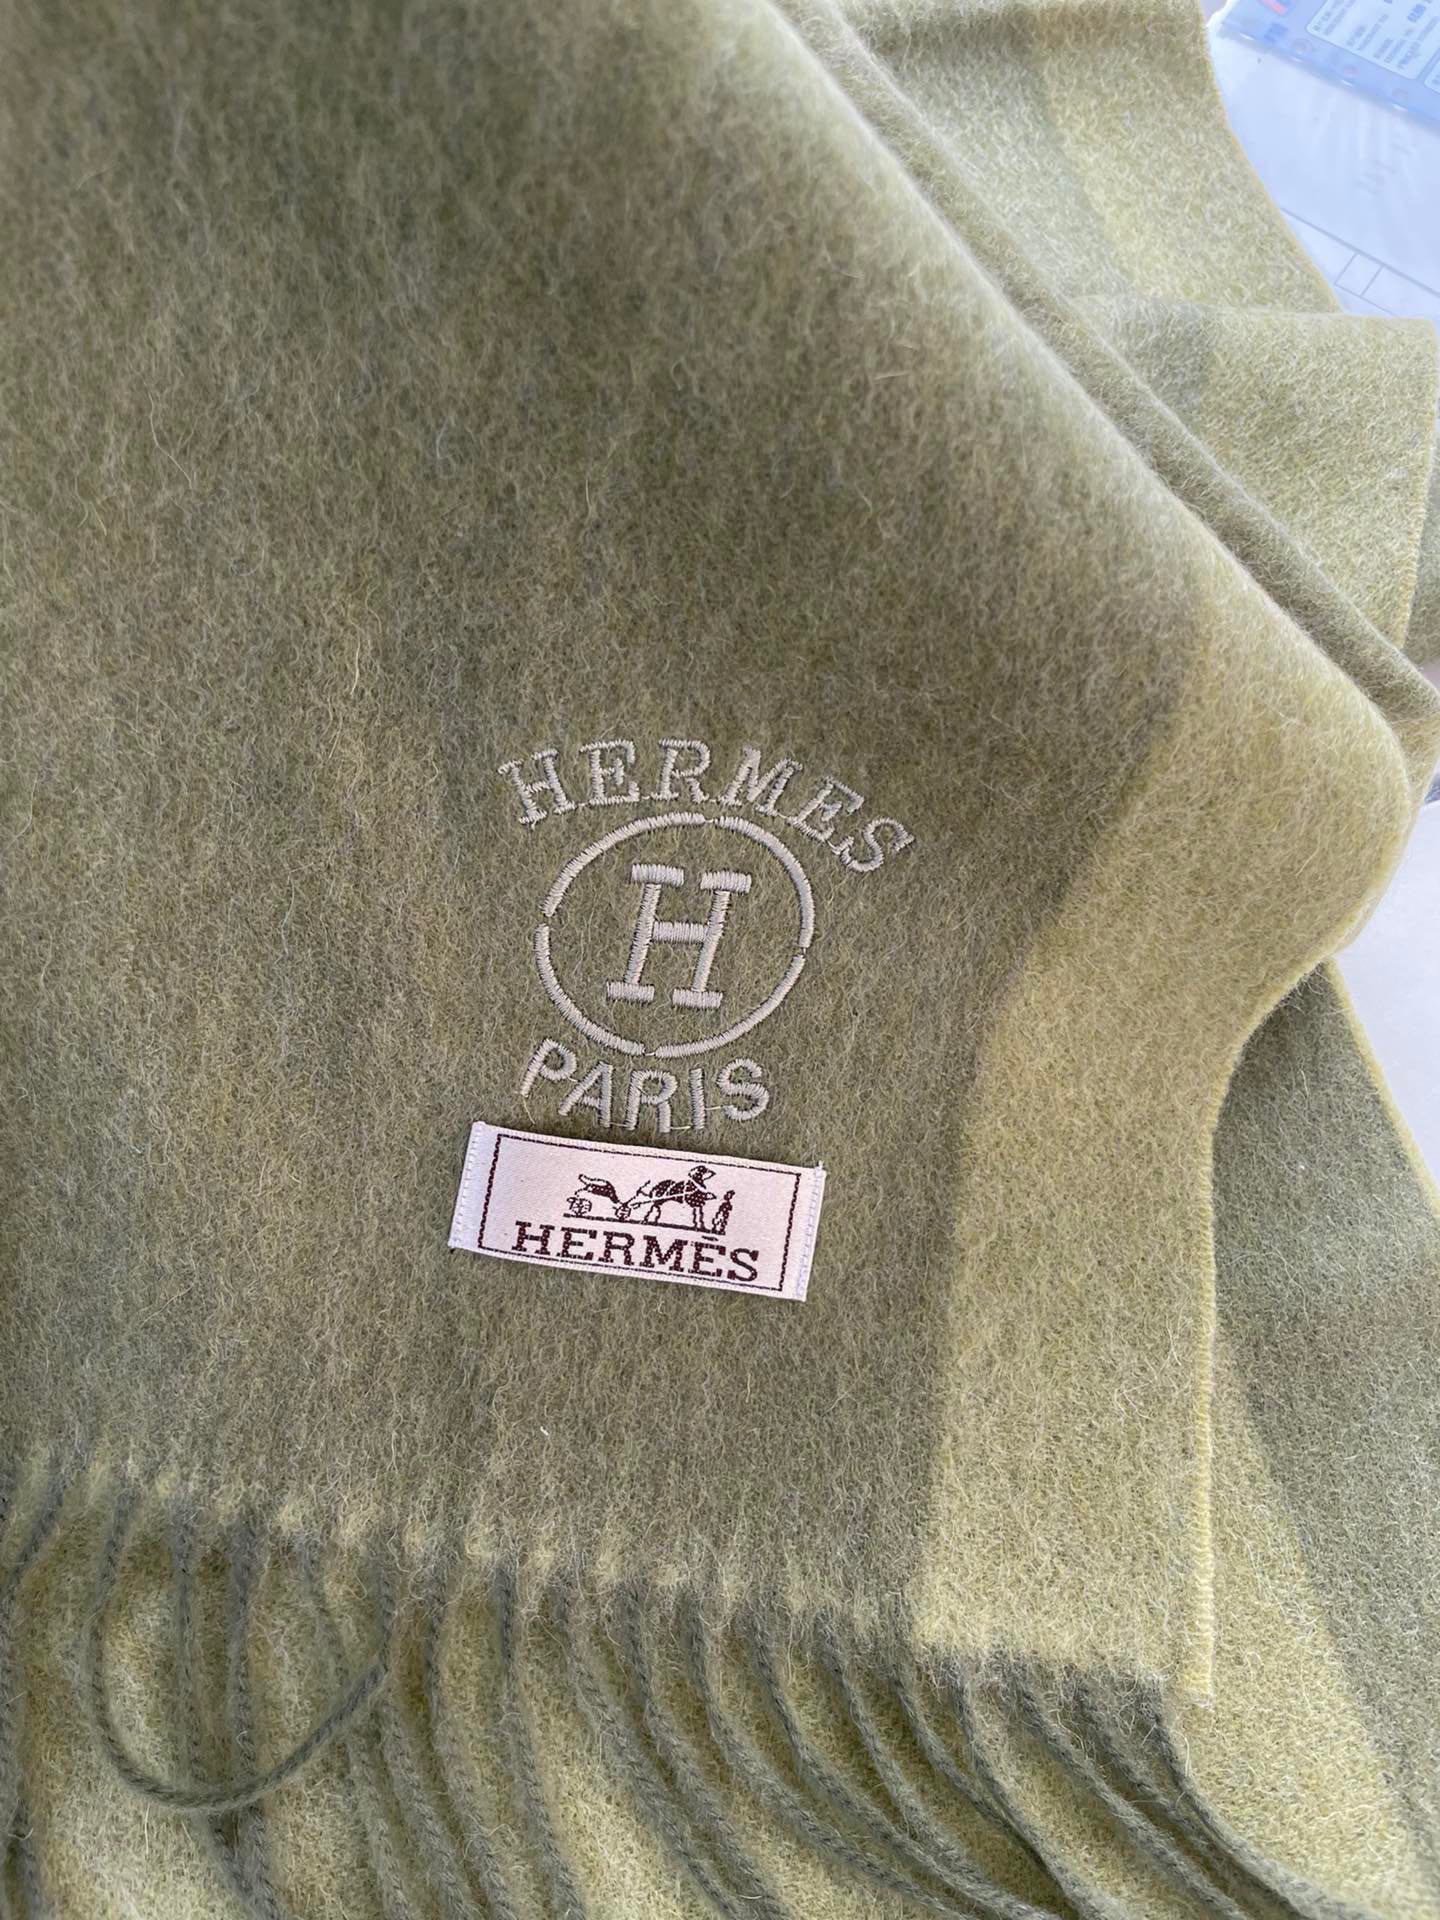 Hermes爱马仕女士拼色羊绒围巾重磅推荐100%顶级山羊绒材质非常保暖柔软亲肤不扎脖经典双面设计一条围